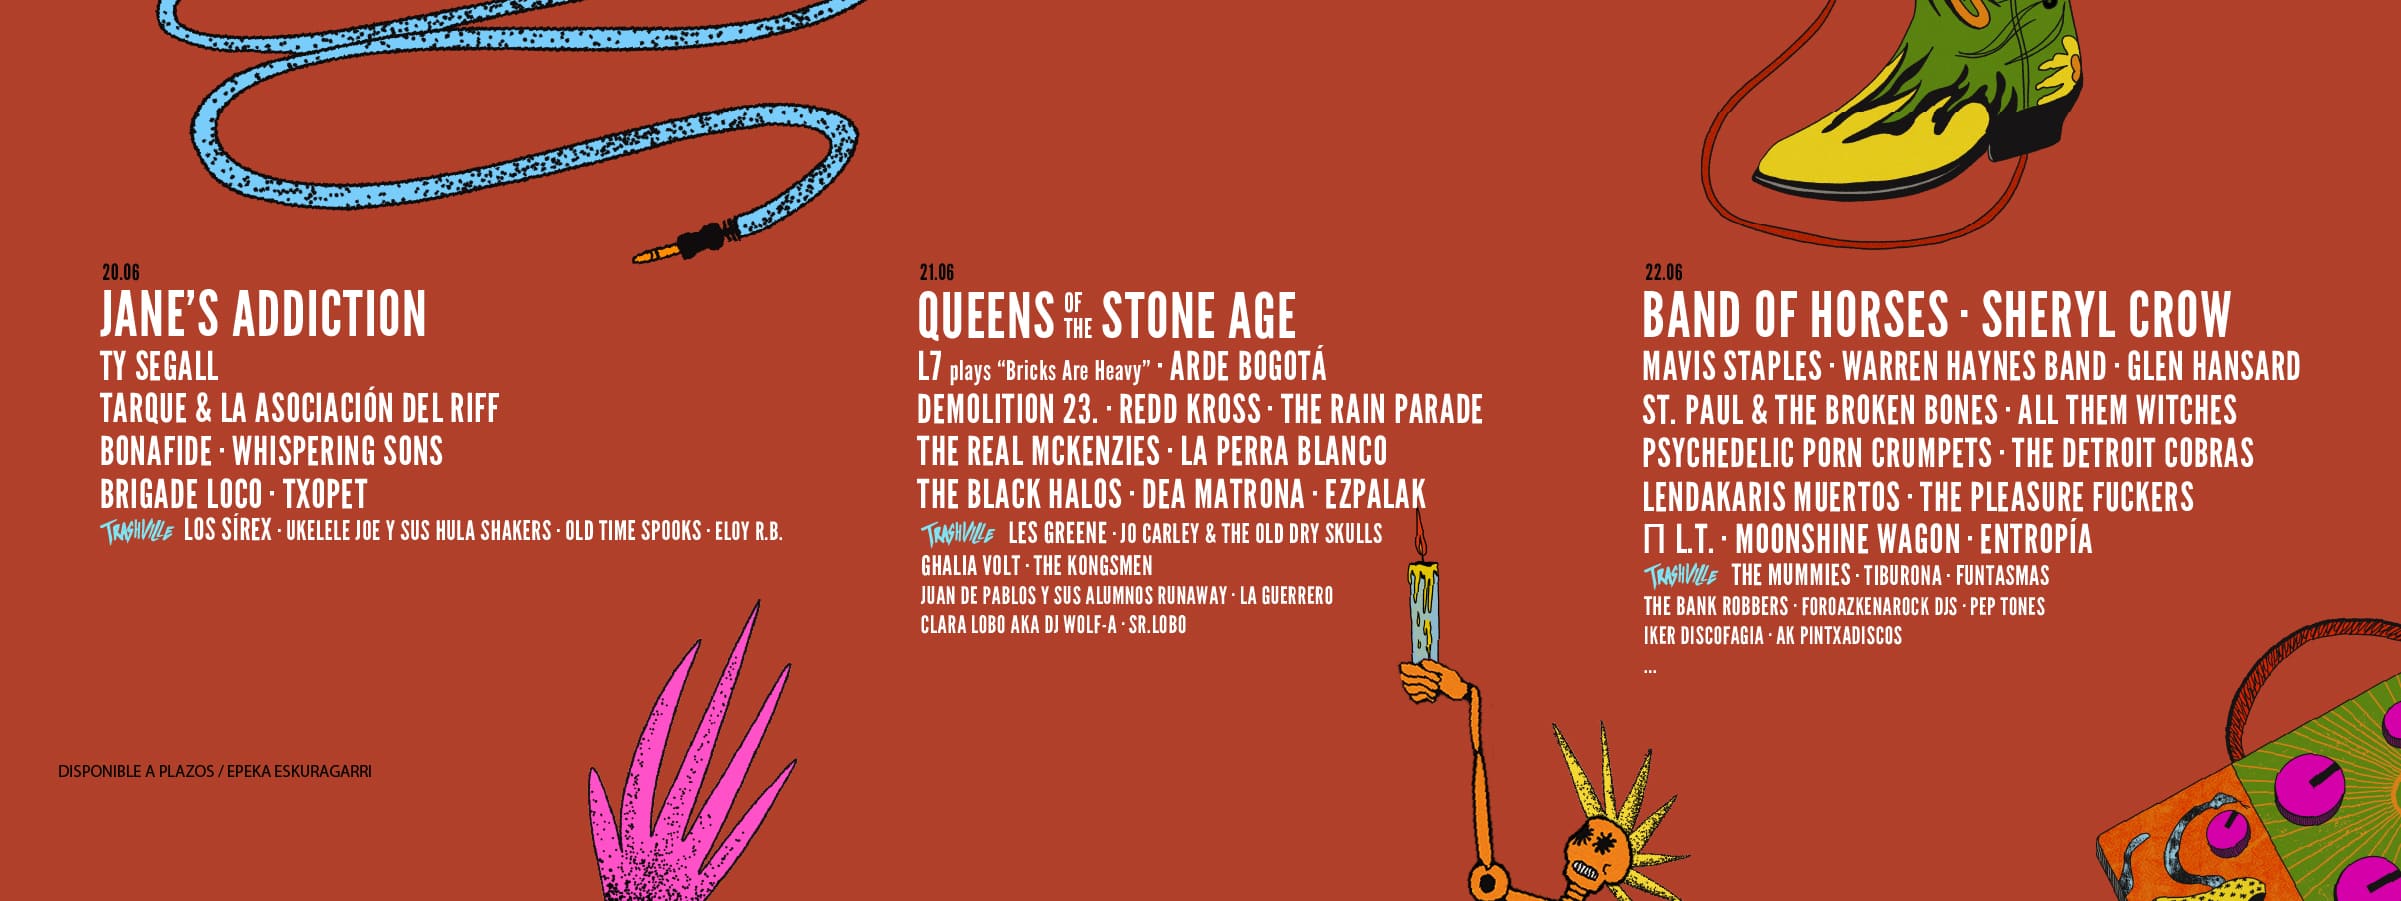 Web poster Azkena Rock Festival